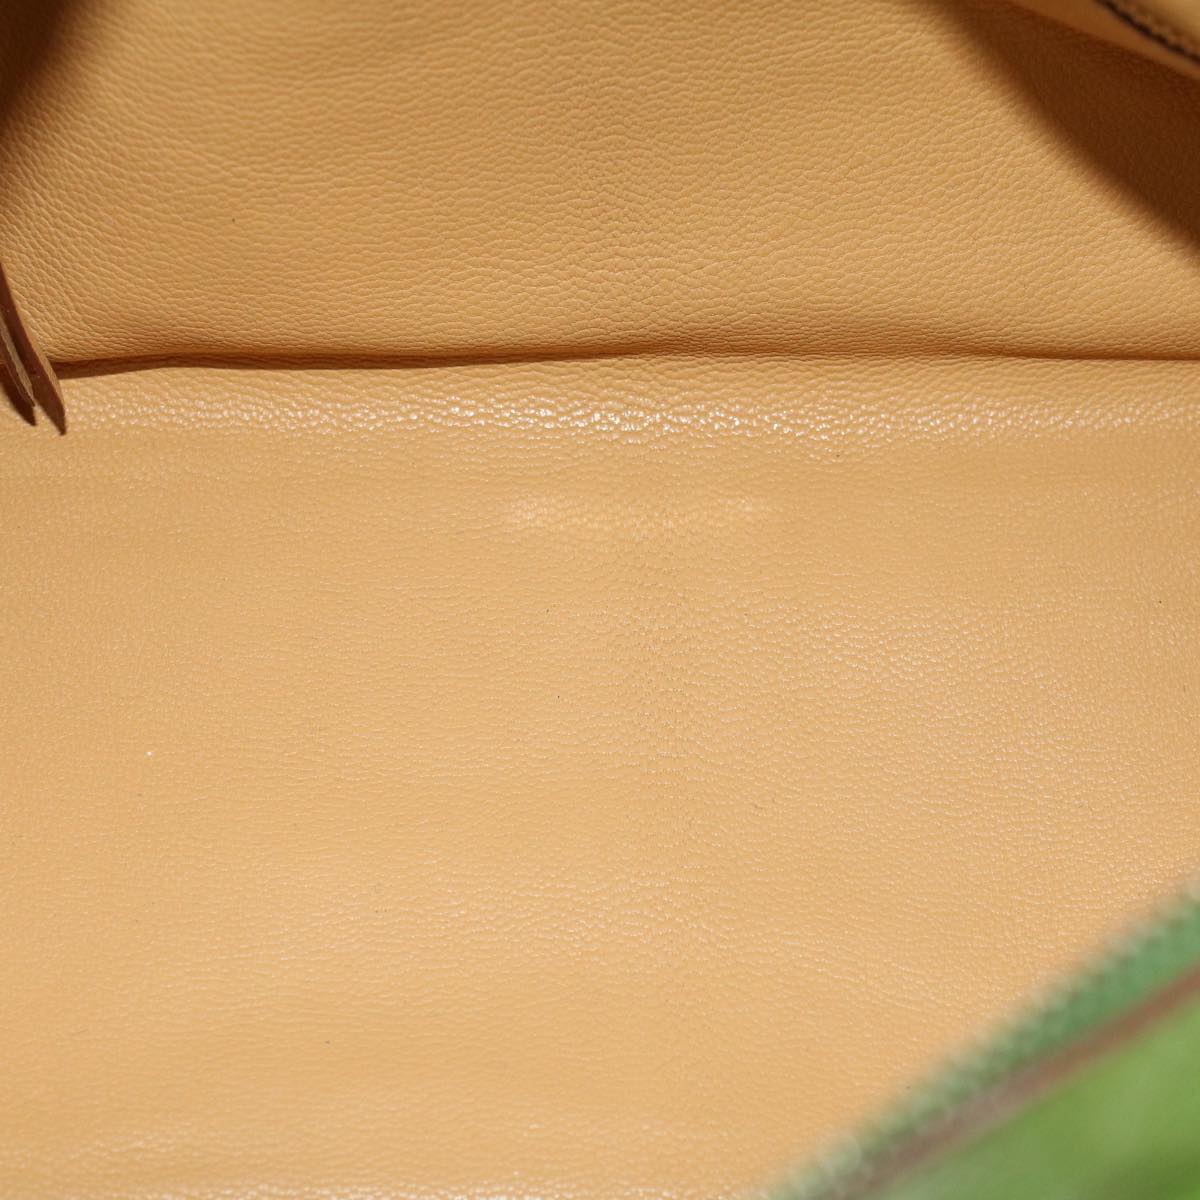 PRADA Hand Bag Leather Green Auth 53715